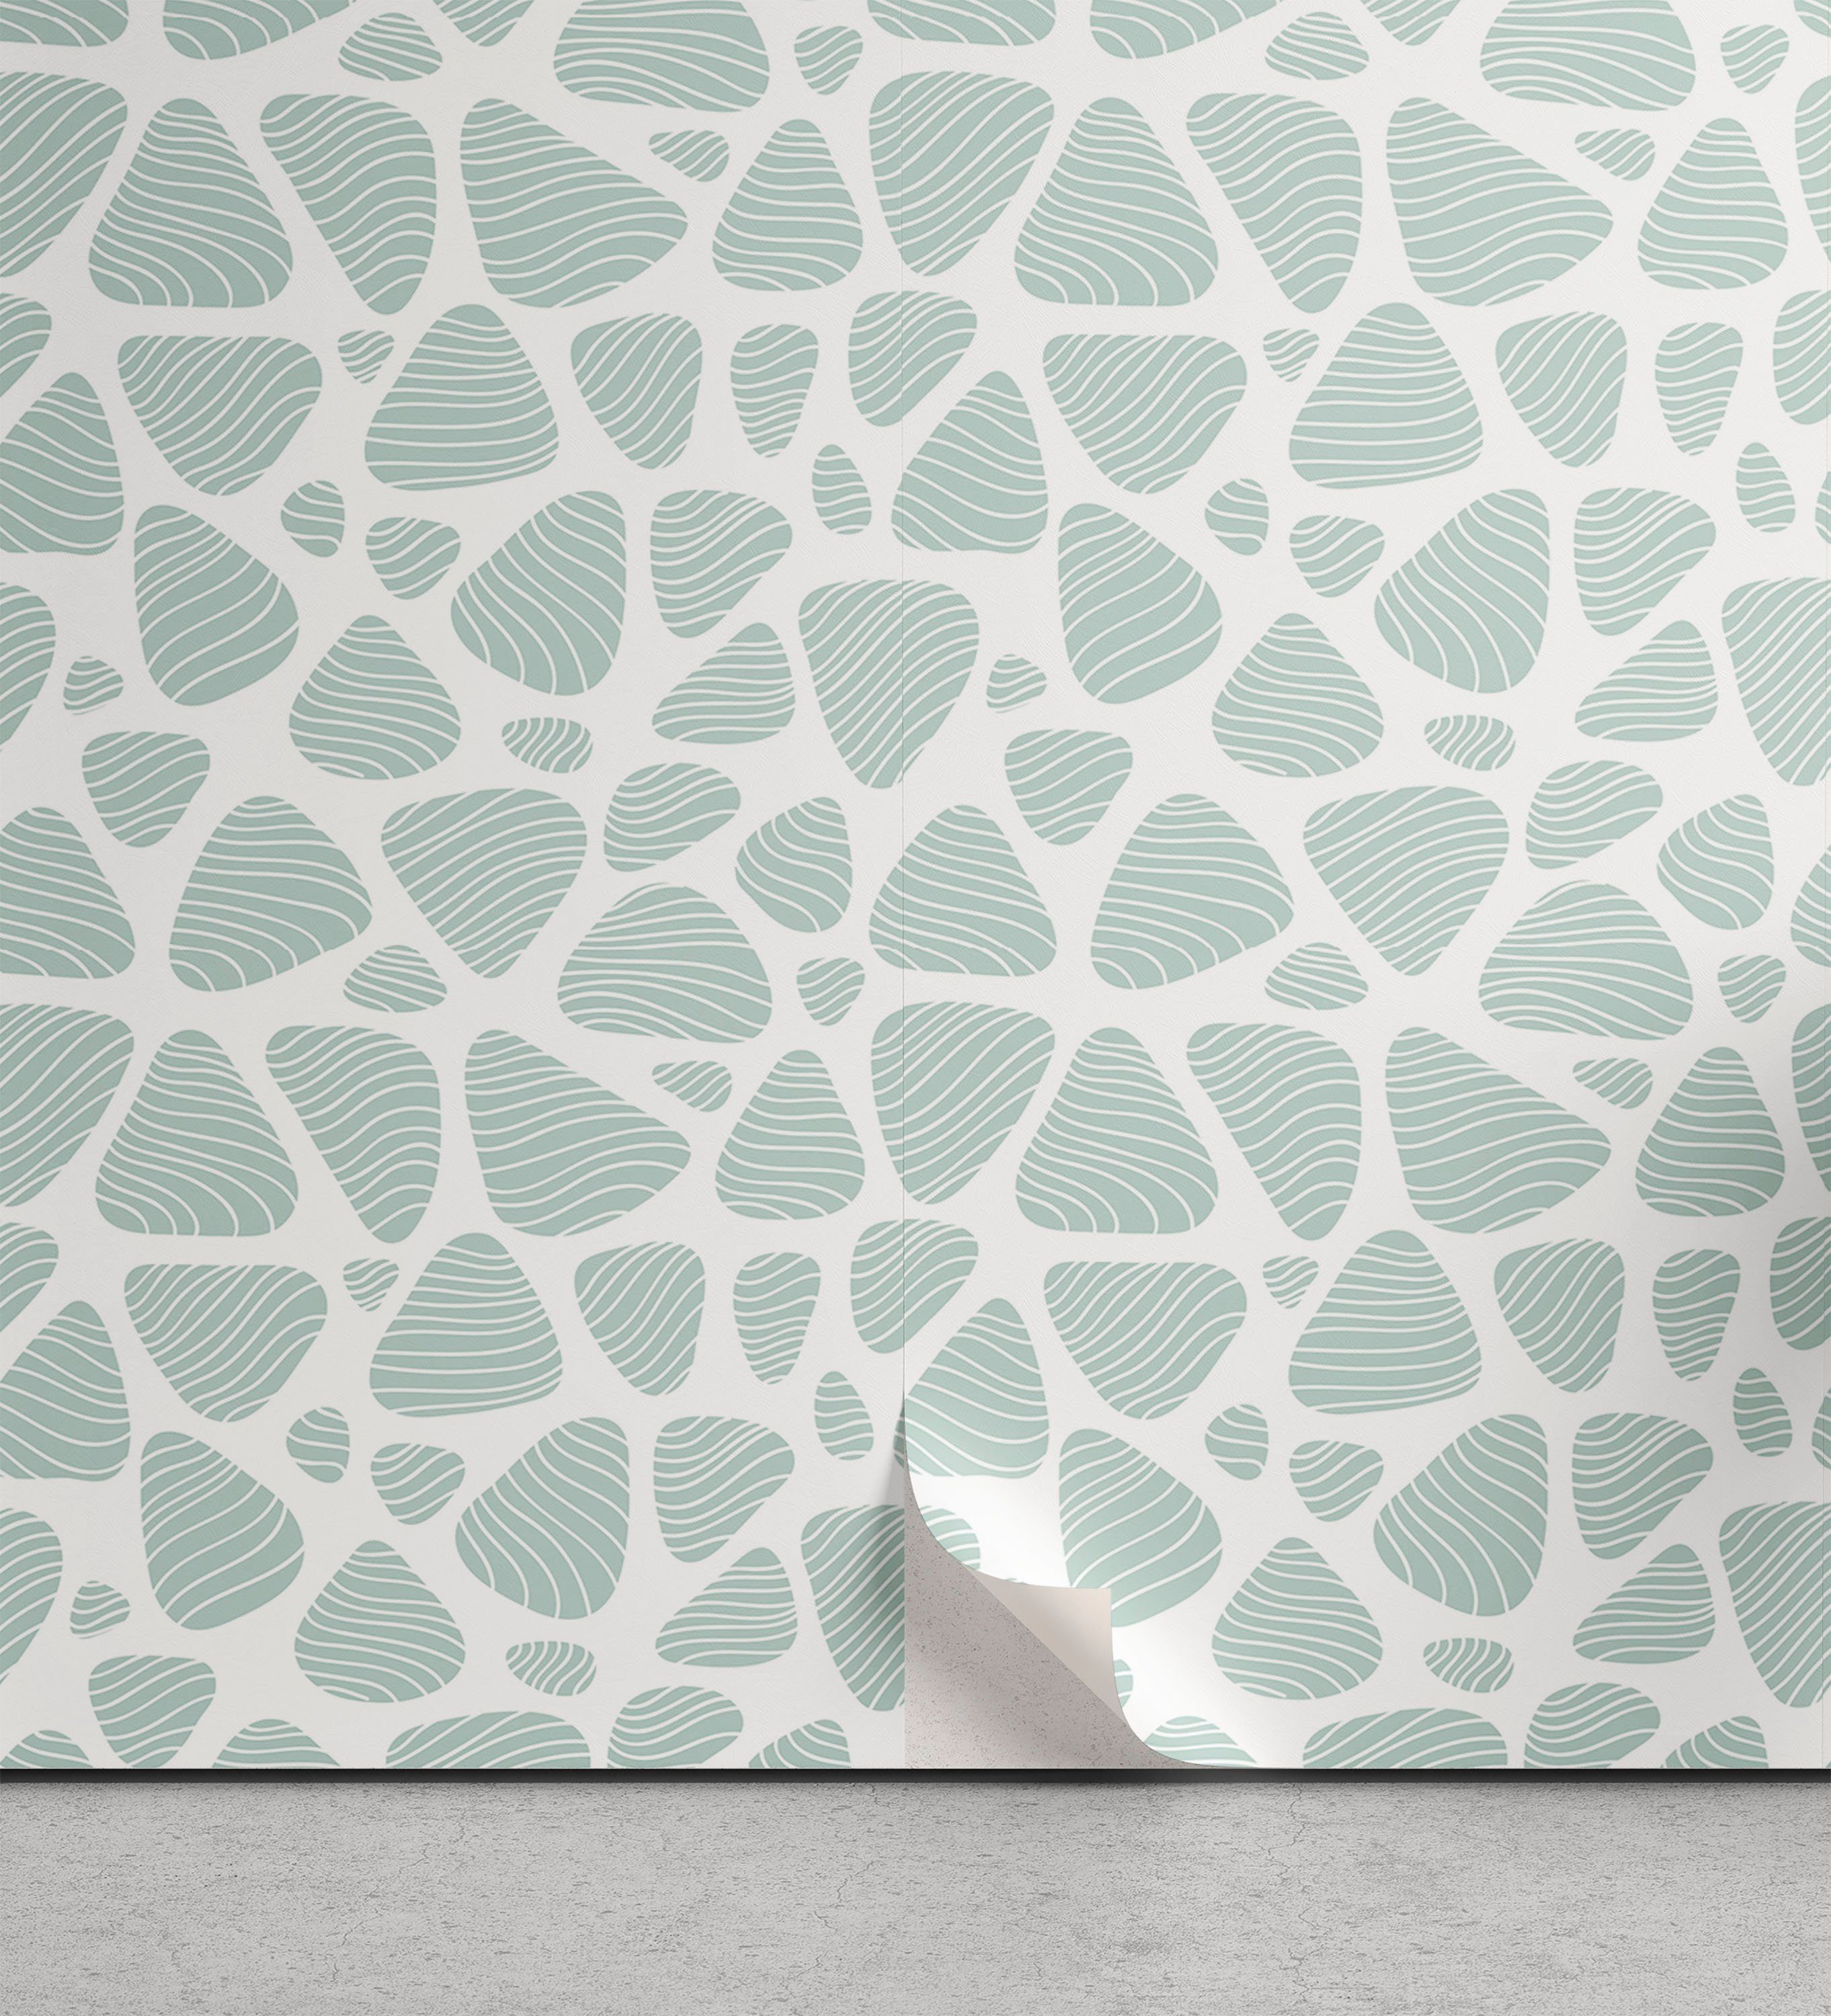 Abakuhaus Vinyltapete neutrale Shapes Pebble Küchenakzent, selbstklebendes Farbe Wie Wohnzimmer